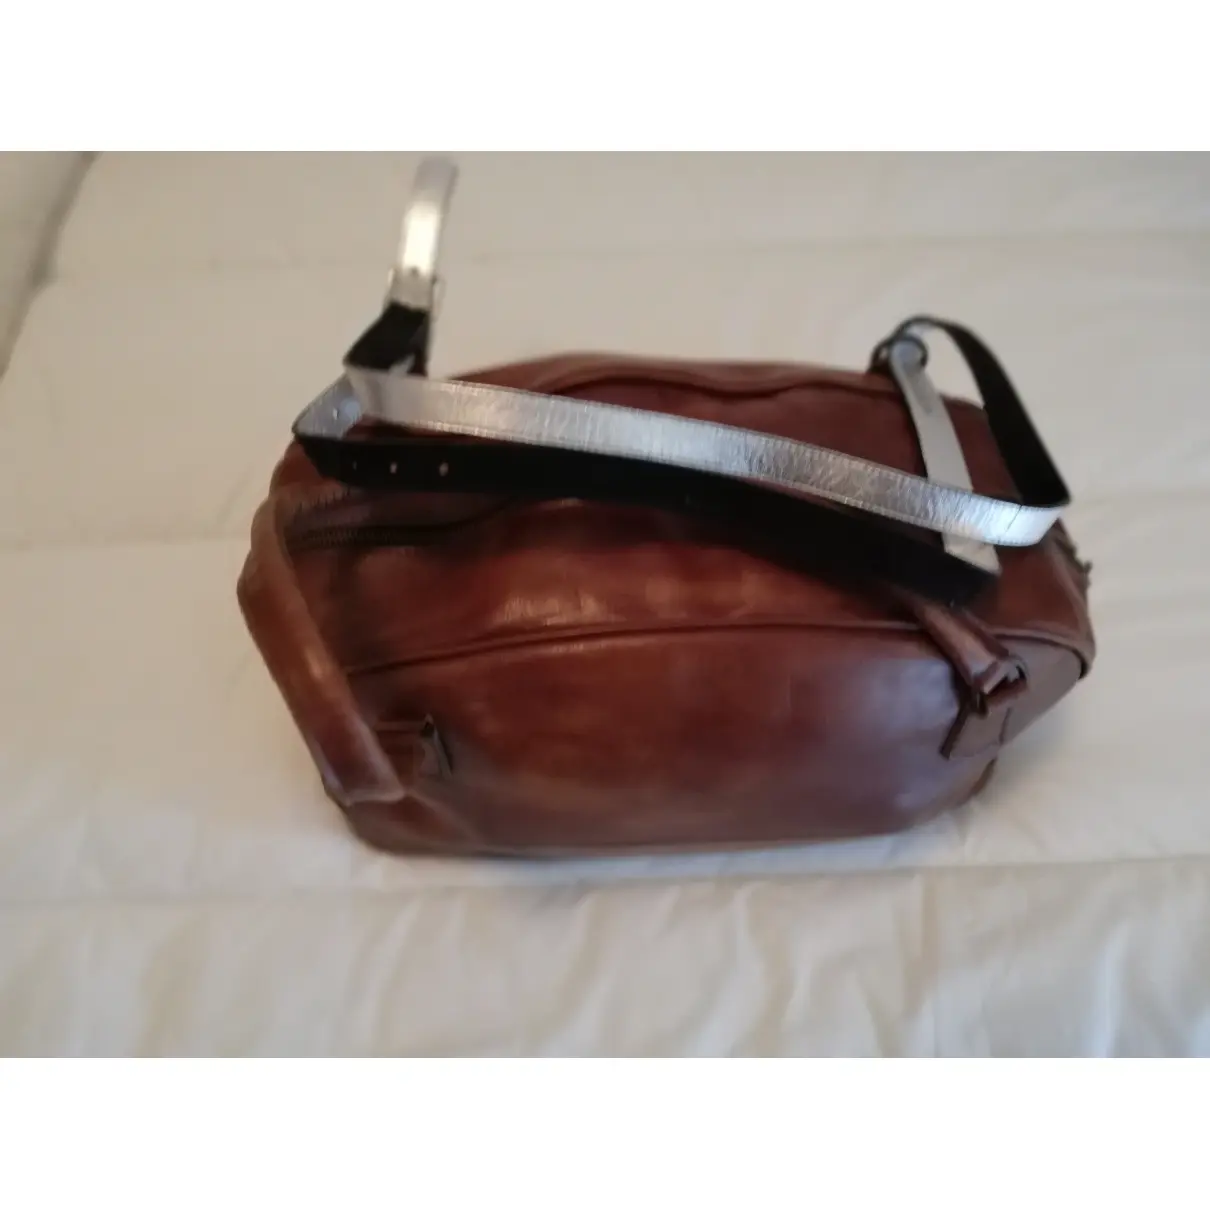 Maison Martin Margiela Leather handbag for sale